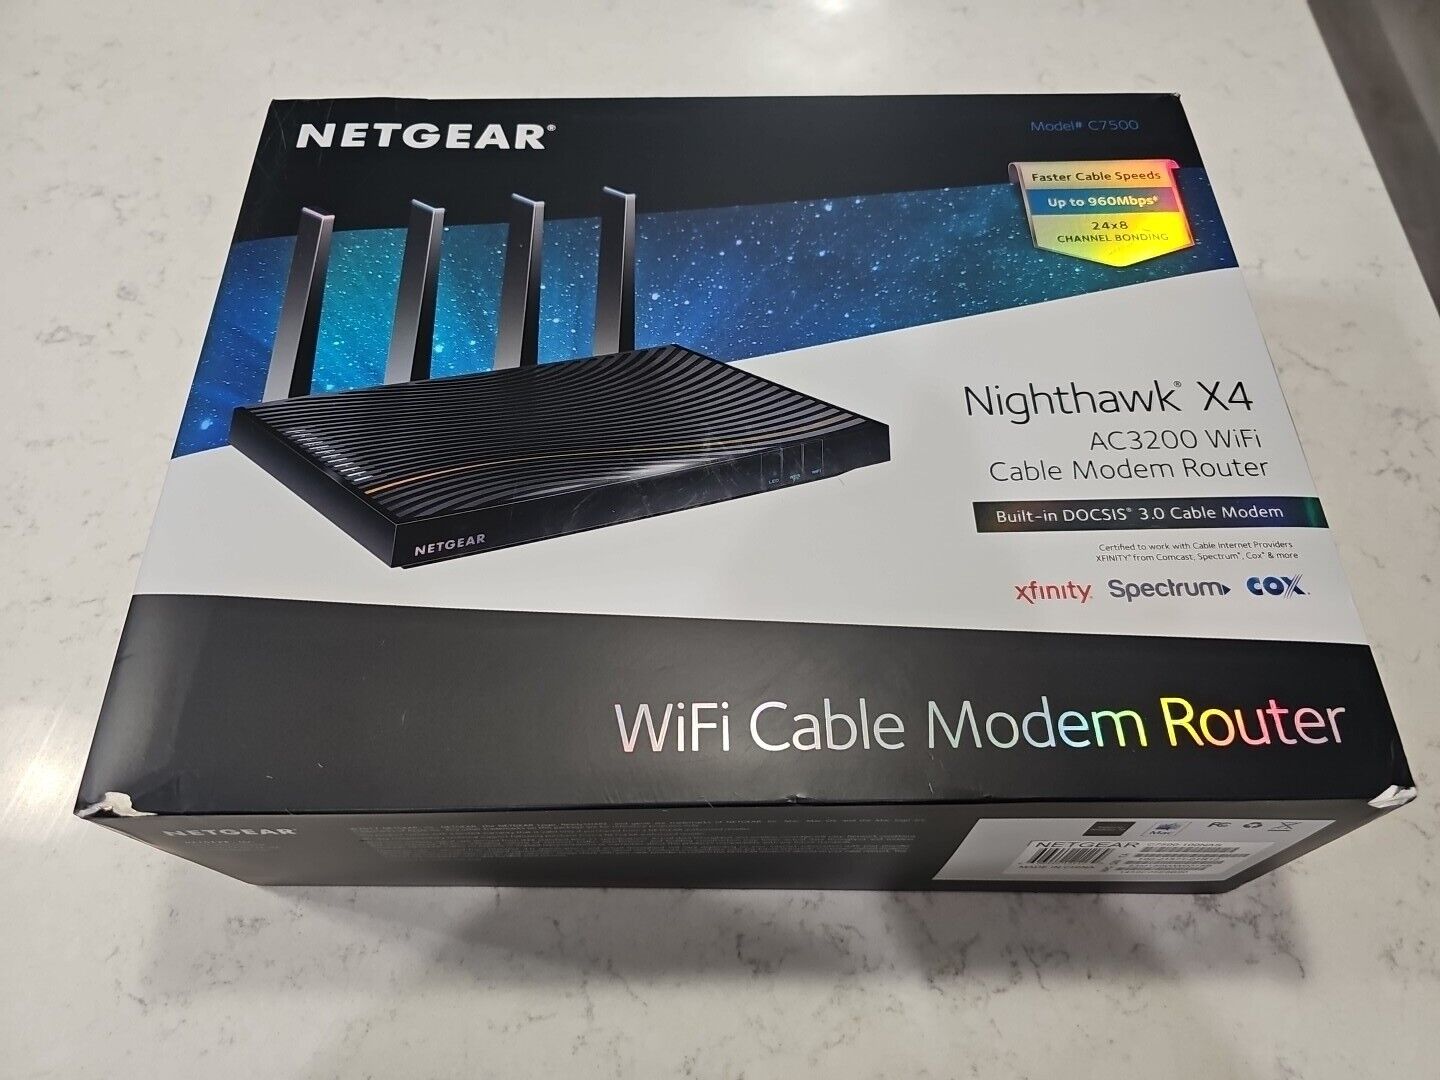 Netgear Nighthawk X4 AC3200 C7500 Wi-Fi Cable Modem Router